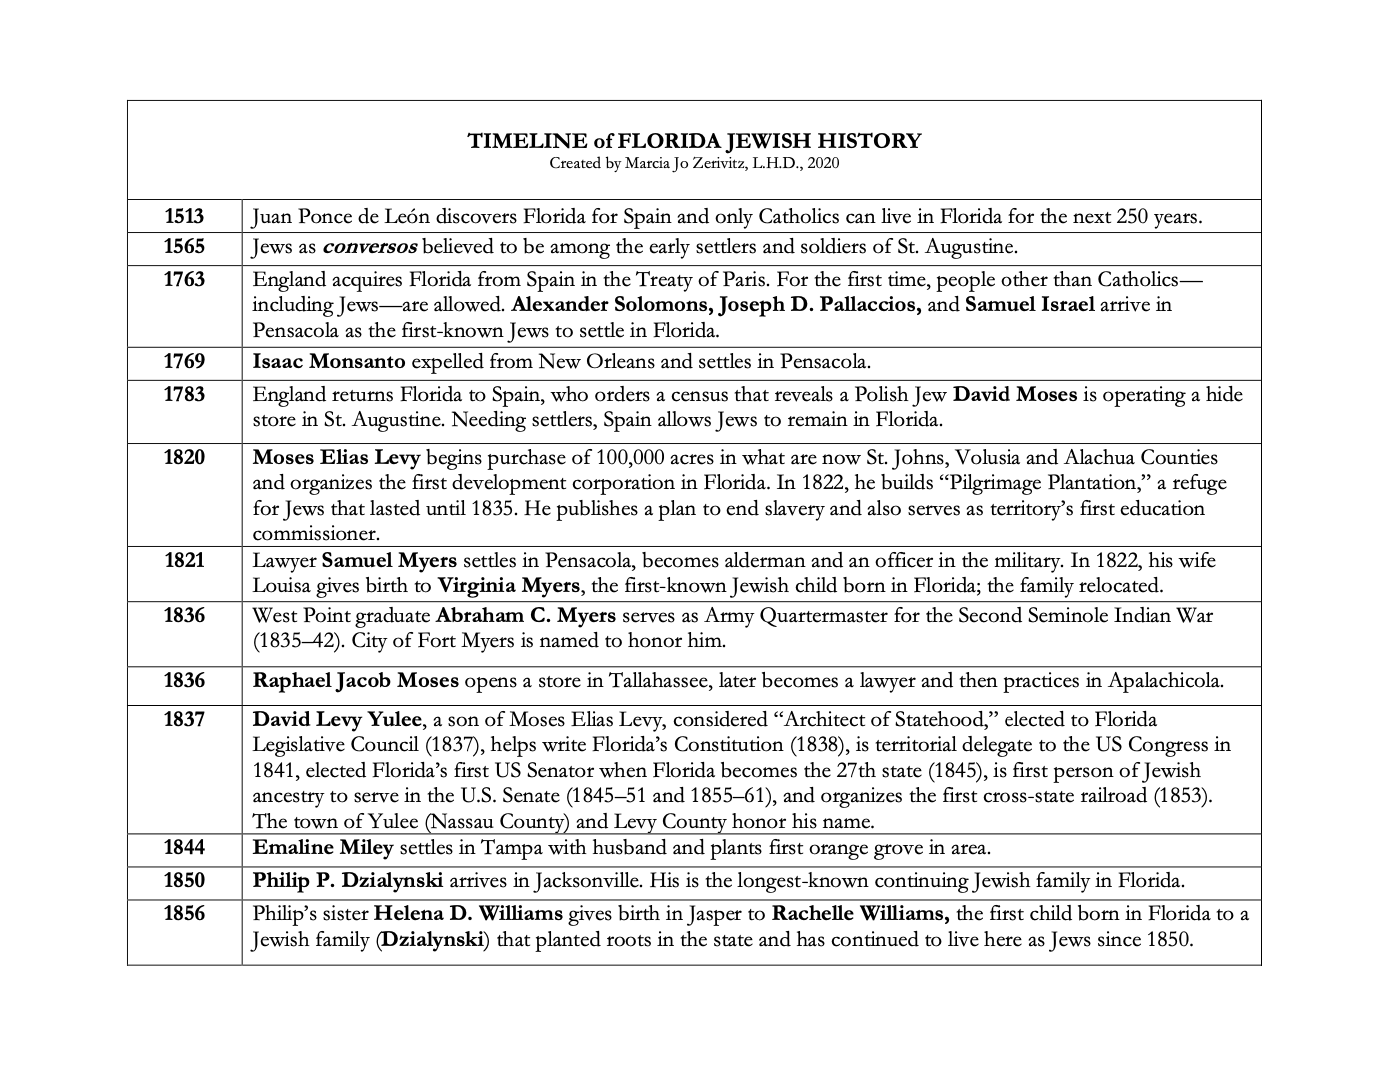 Florida Jewish History Timeline PDF